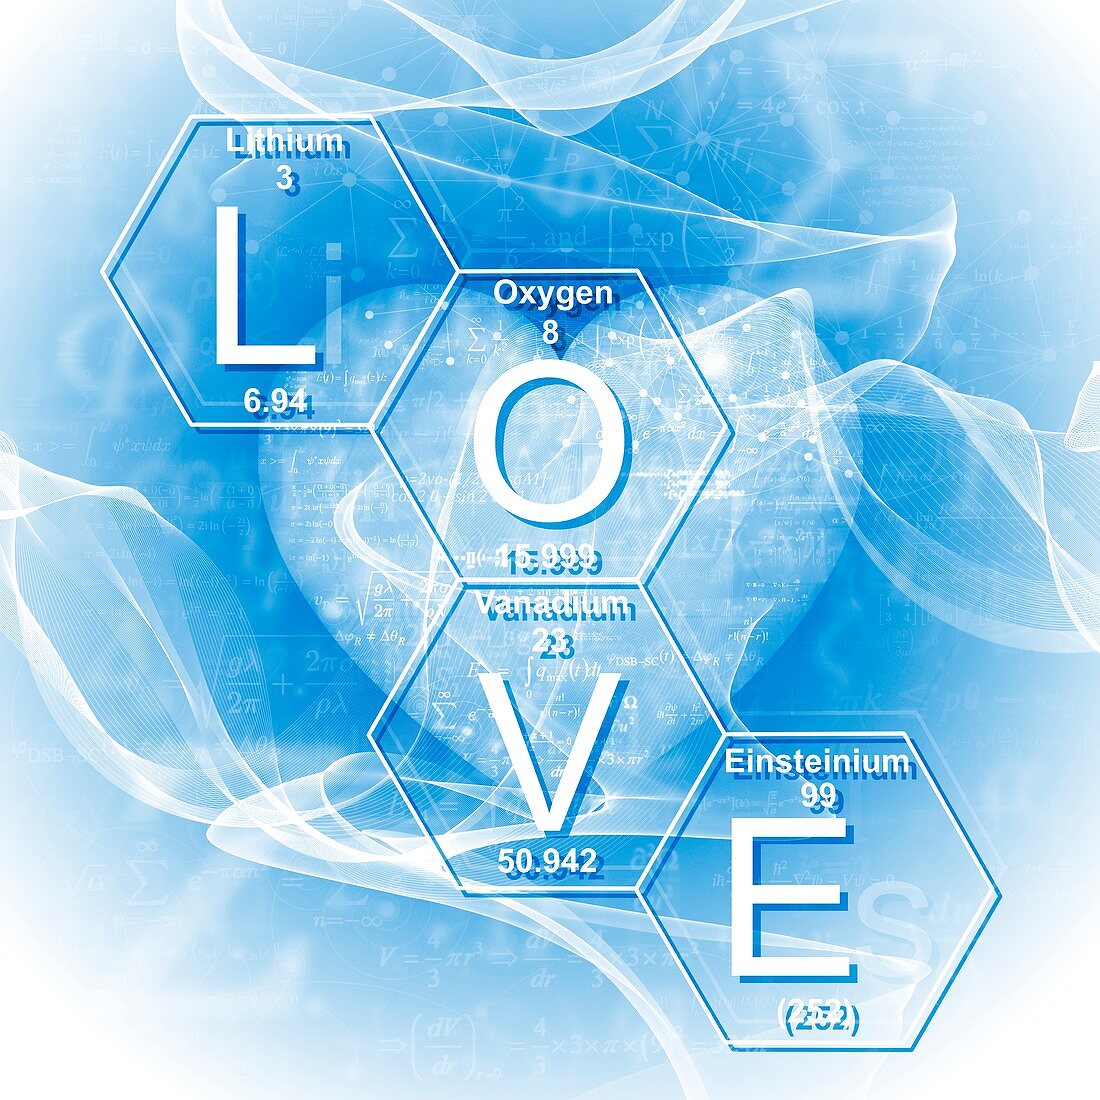 Chemical elements love, illustration